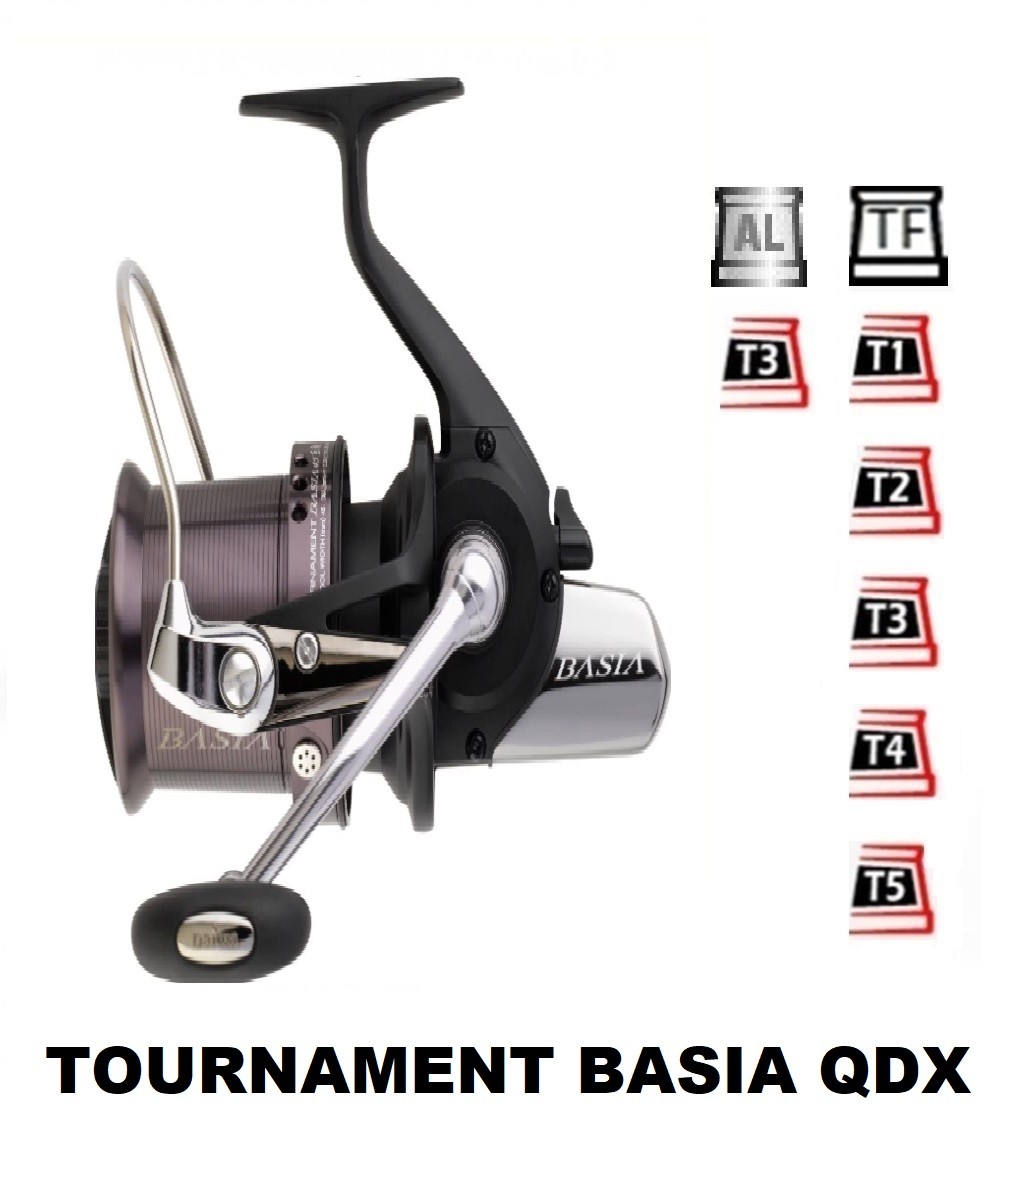 Tournament Basia Qdx Spare spools